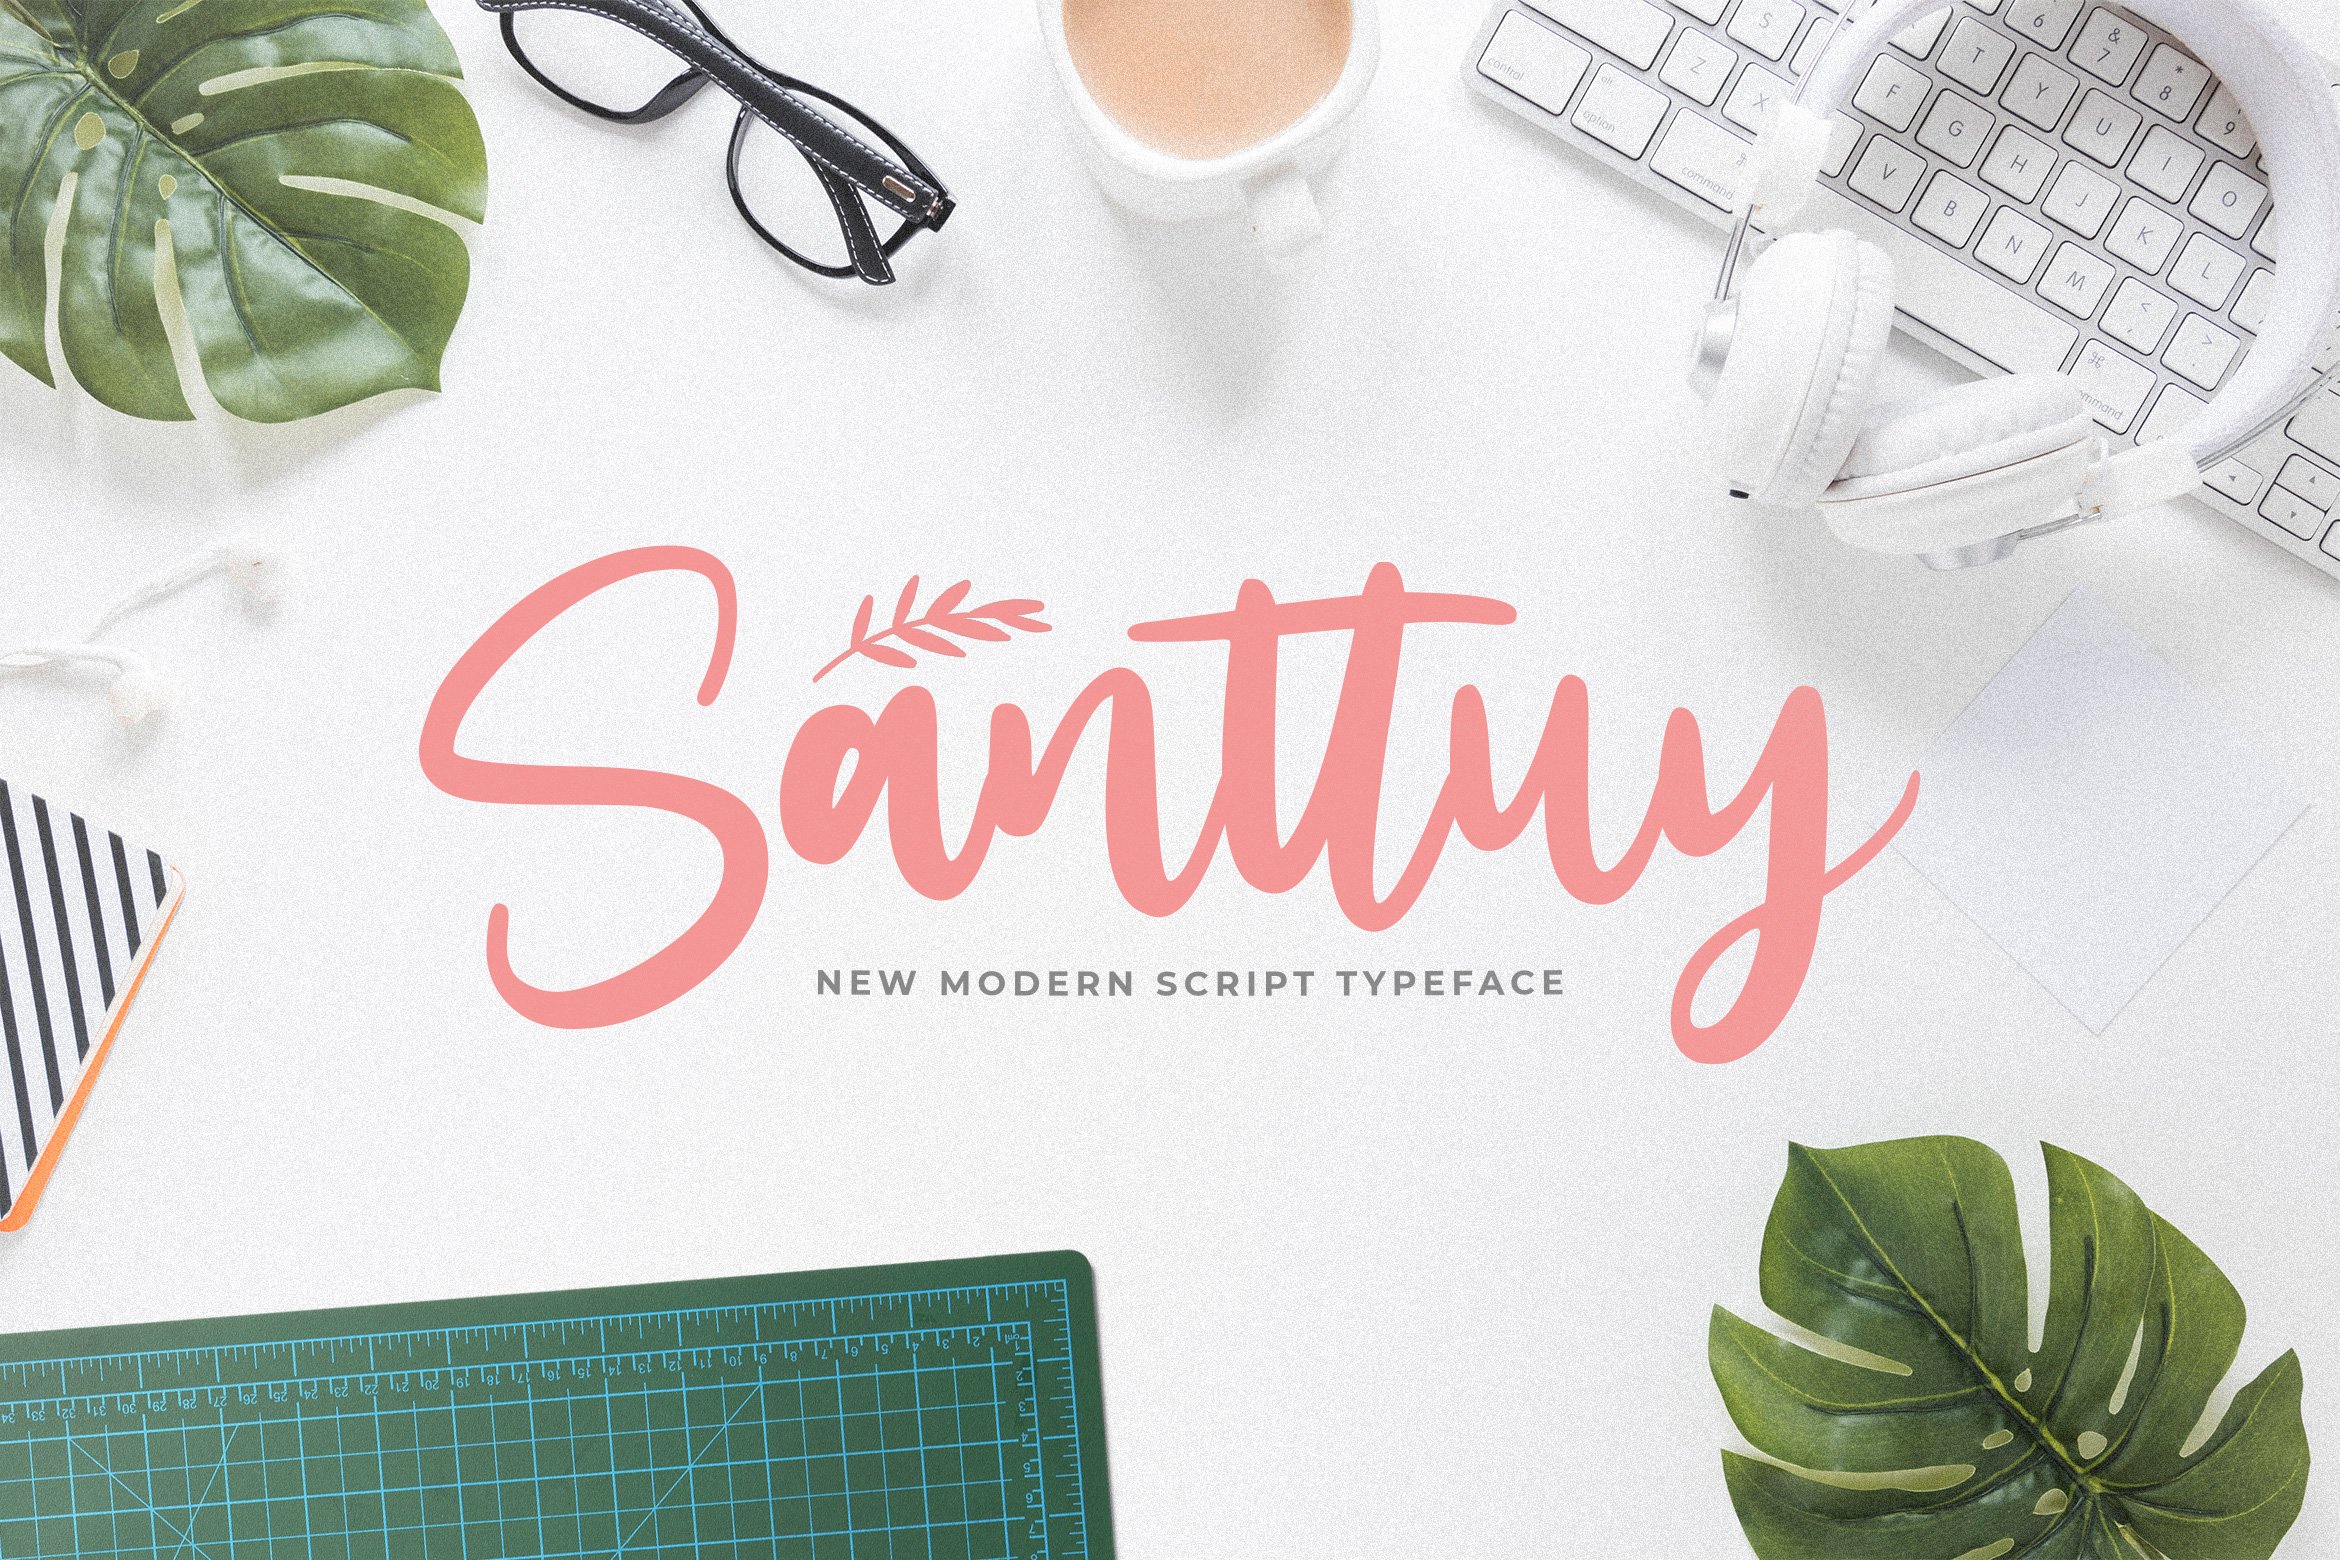 Santtuy - Handwritten Font cover image.